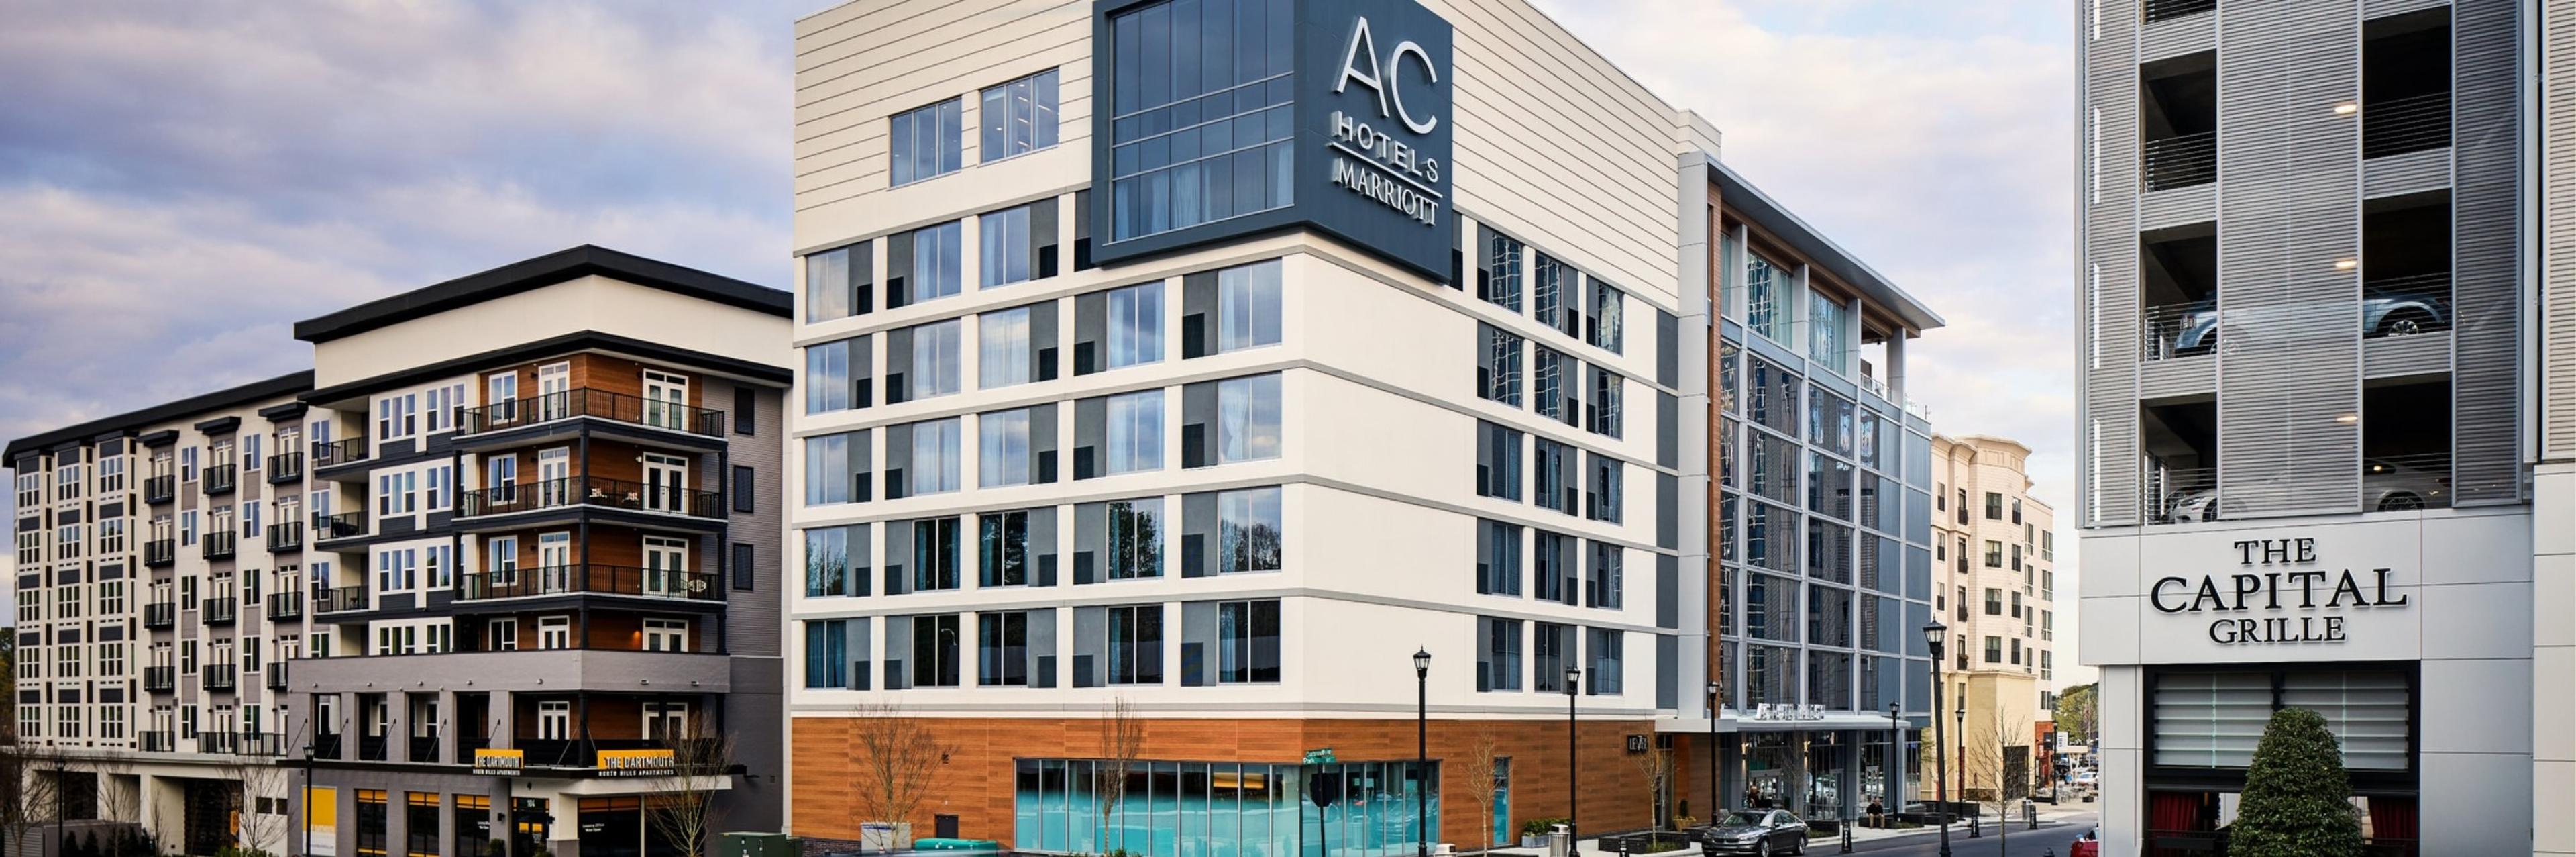 AC Hotel by Marriott Raleigh North Hills